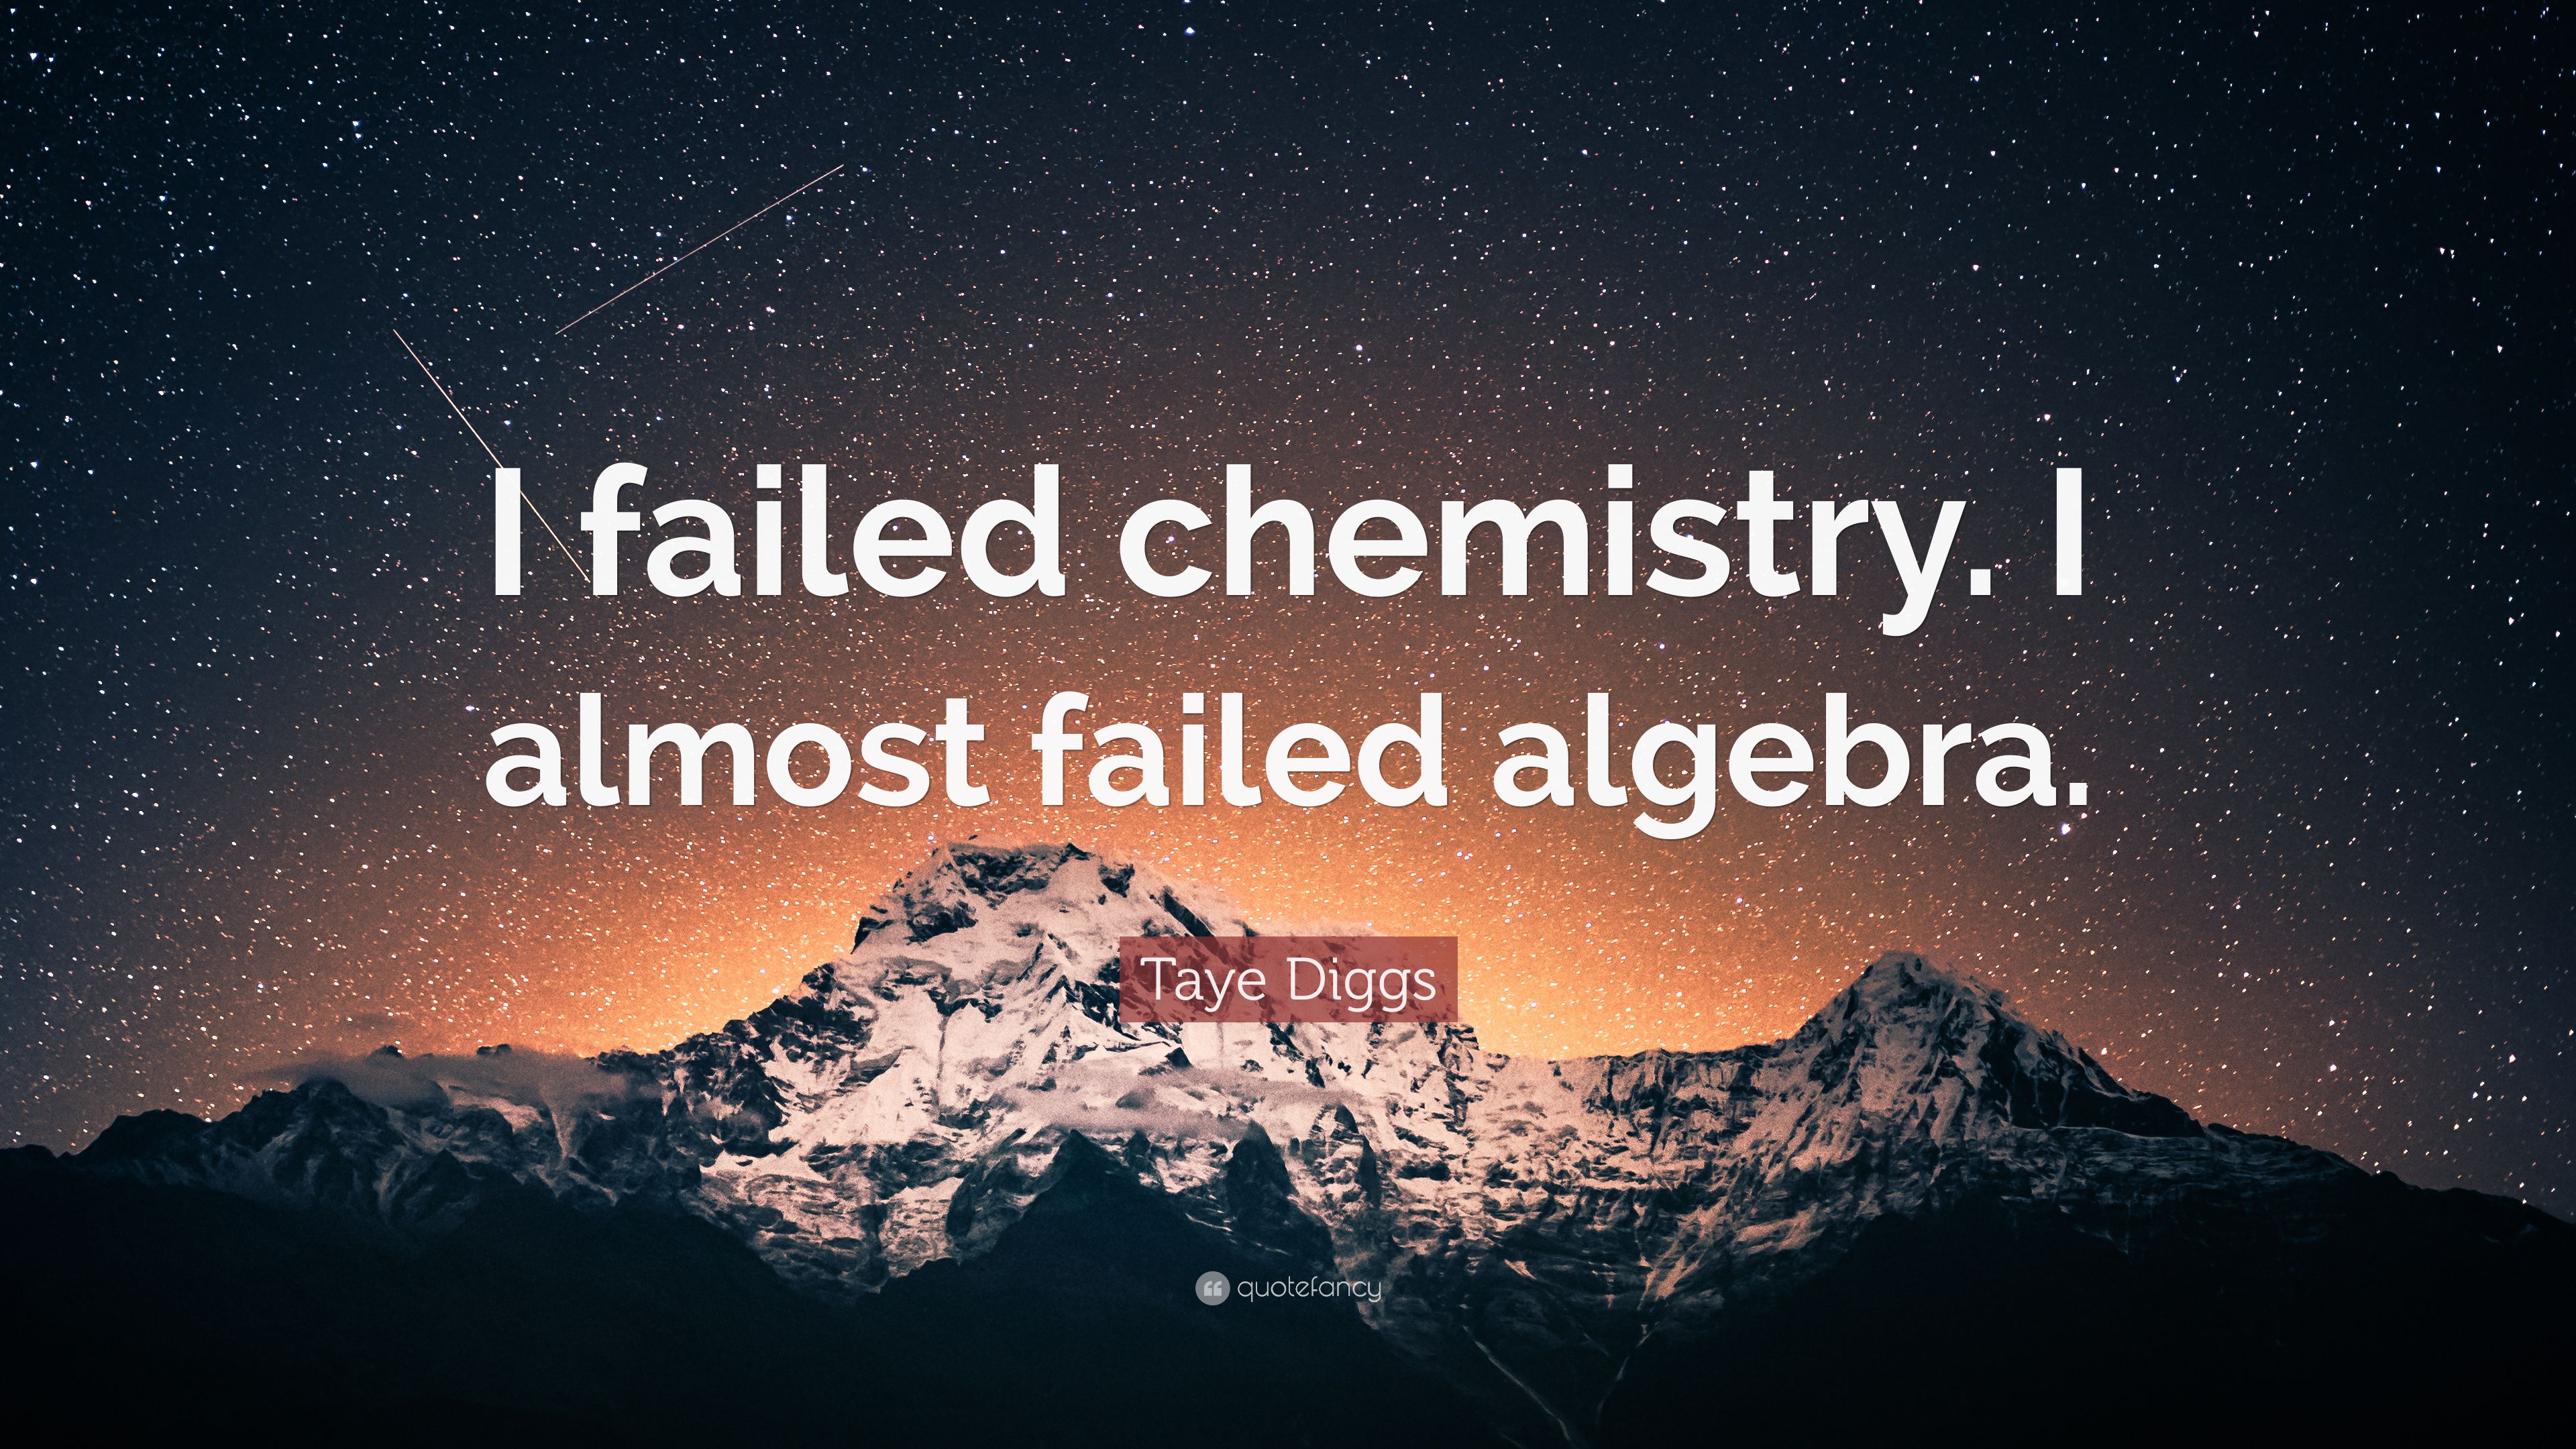 Taye Diggs Quote: “I failed chemistry. I almost failed algebra.” 9